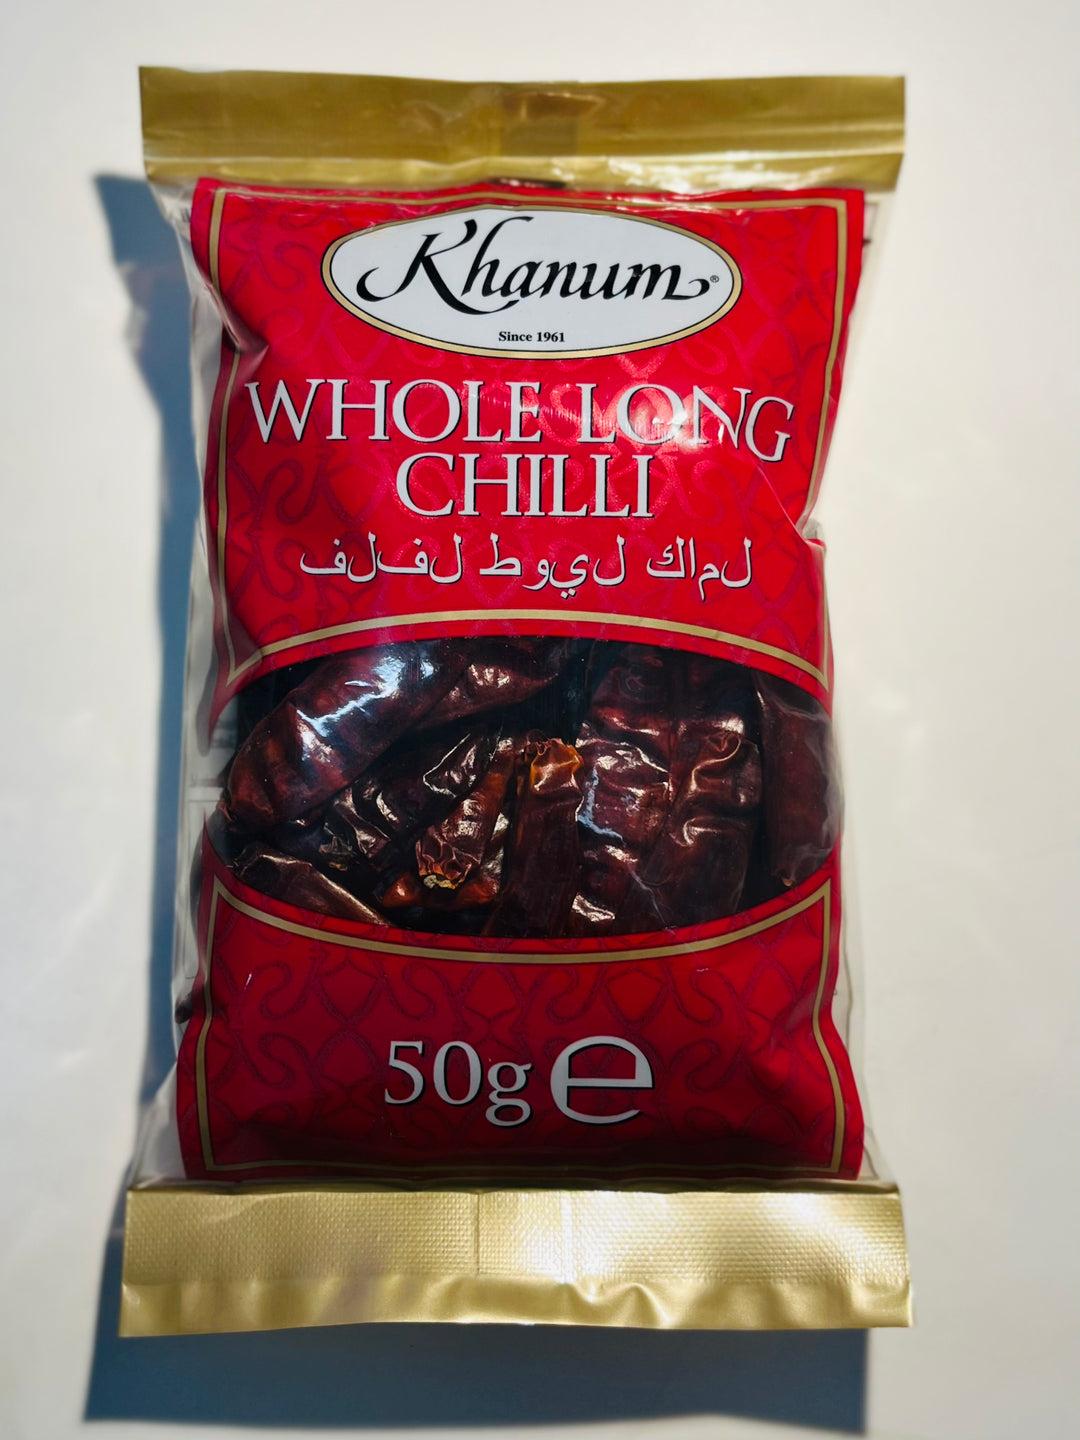 Khanum Whole Long Chilli 50g